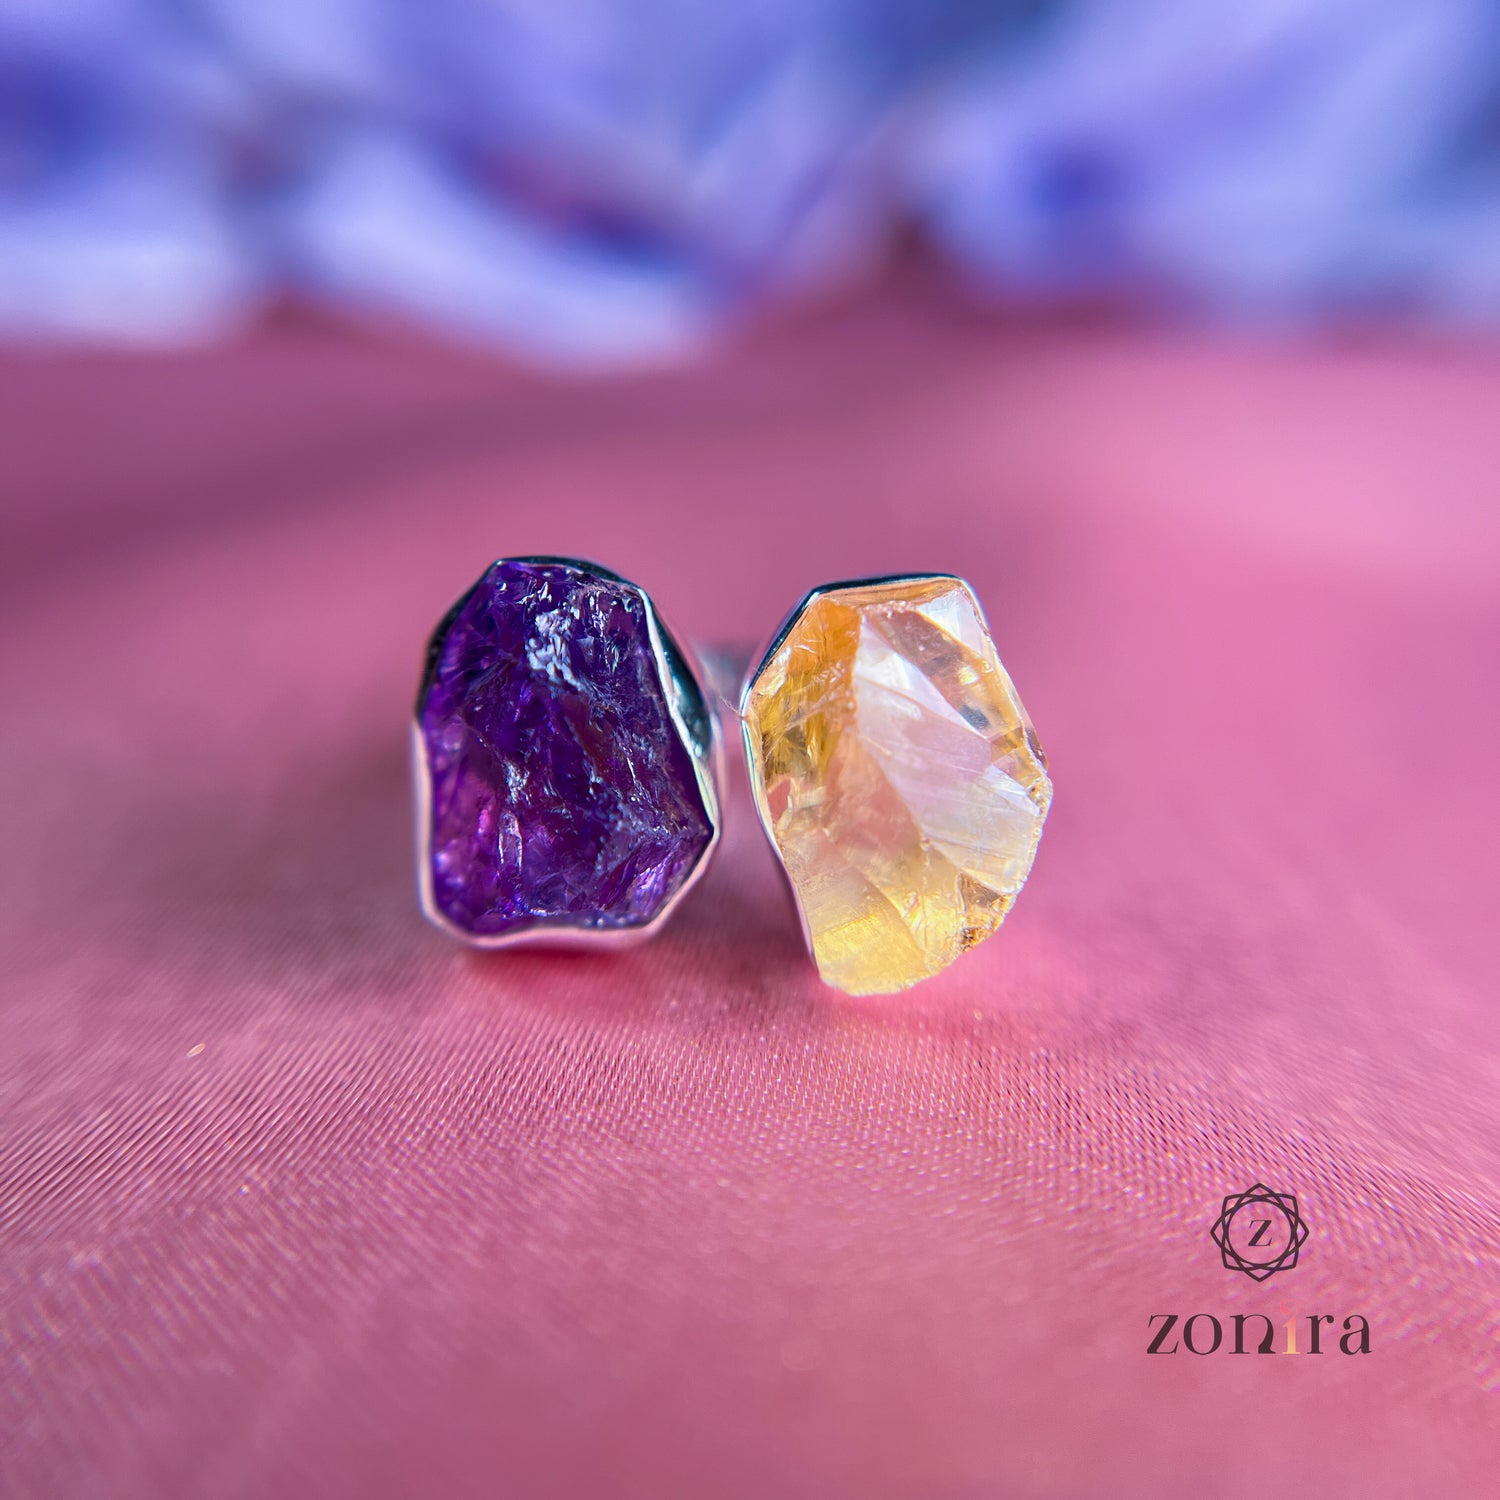 Uncut Gemstones Jewellery